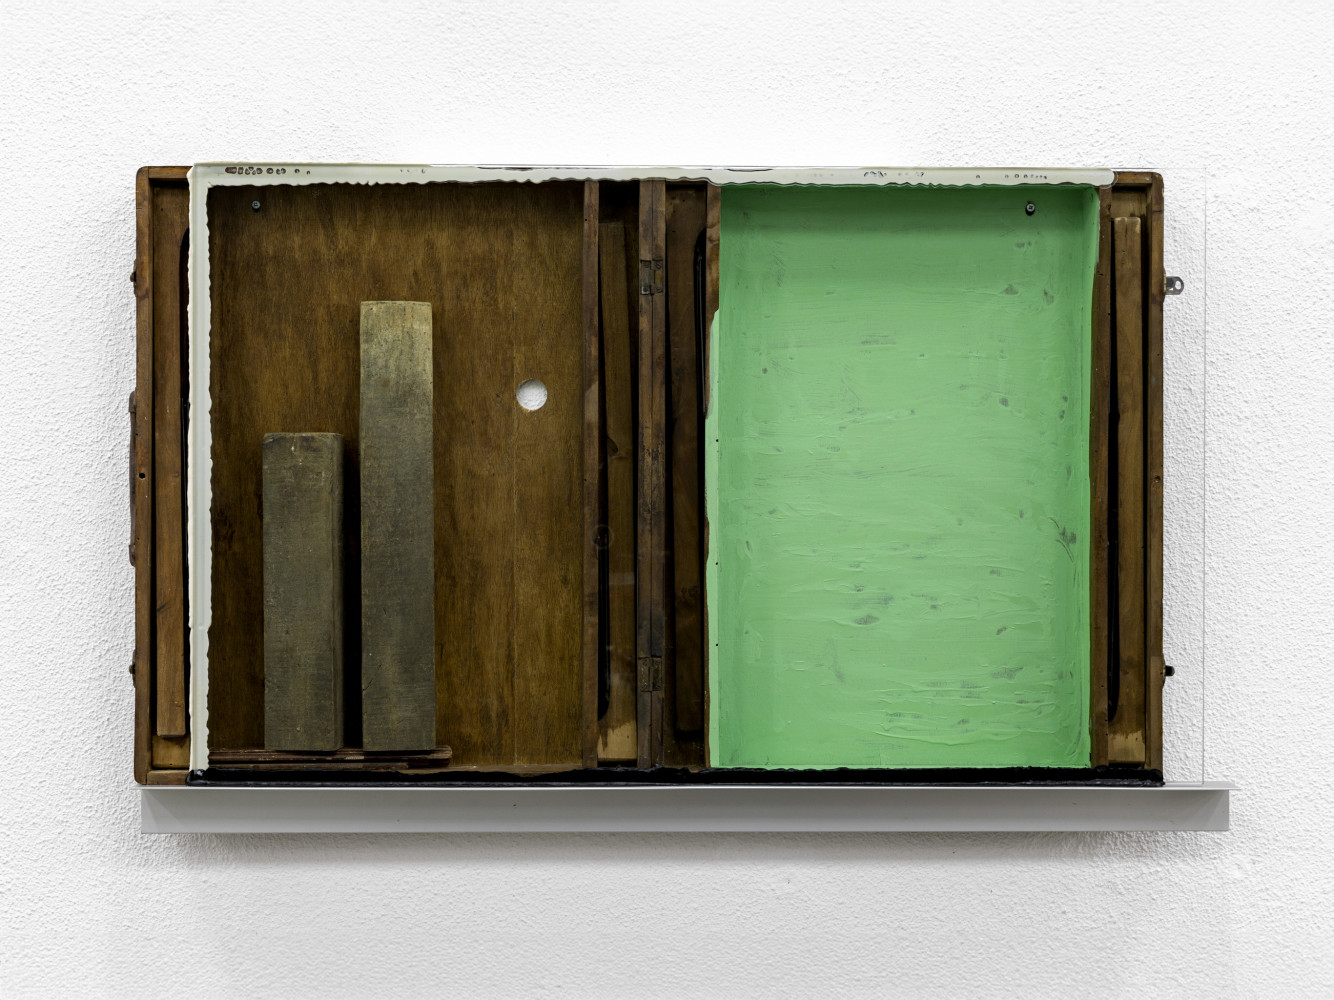 Pedro Cabrita Reis, ‘Natura morta II’, 2023, Glass, aluminium, found wood objects, acrylic on wood